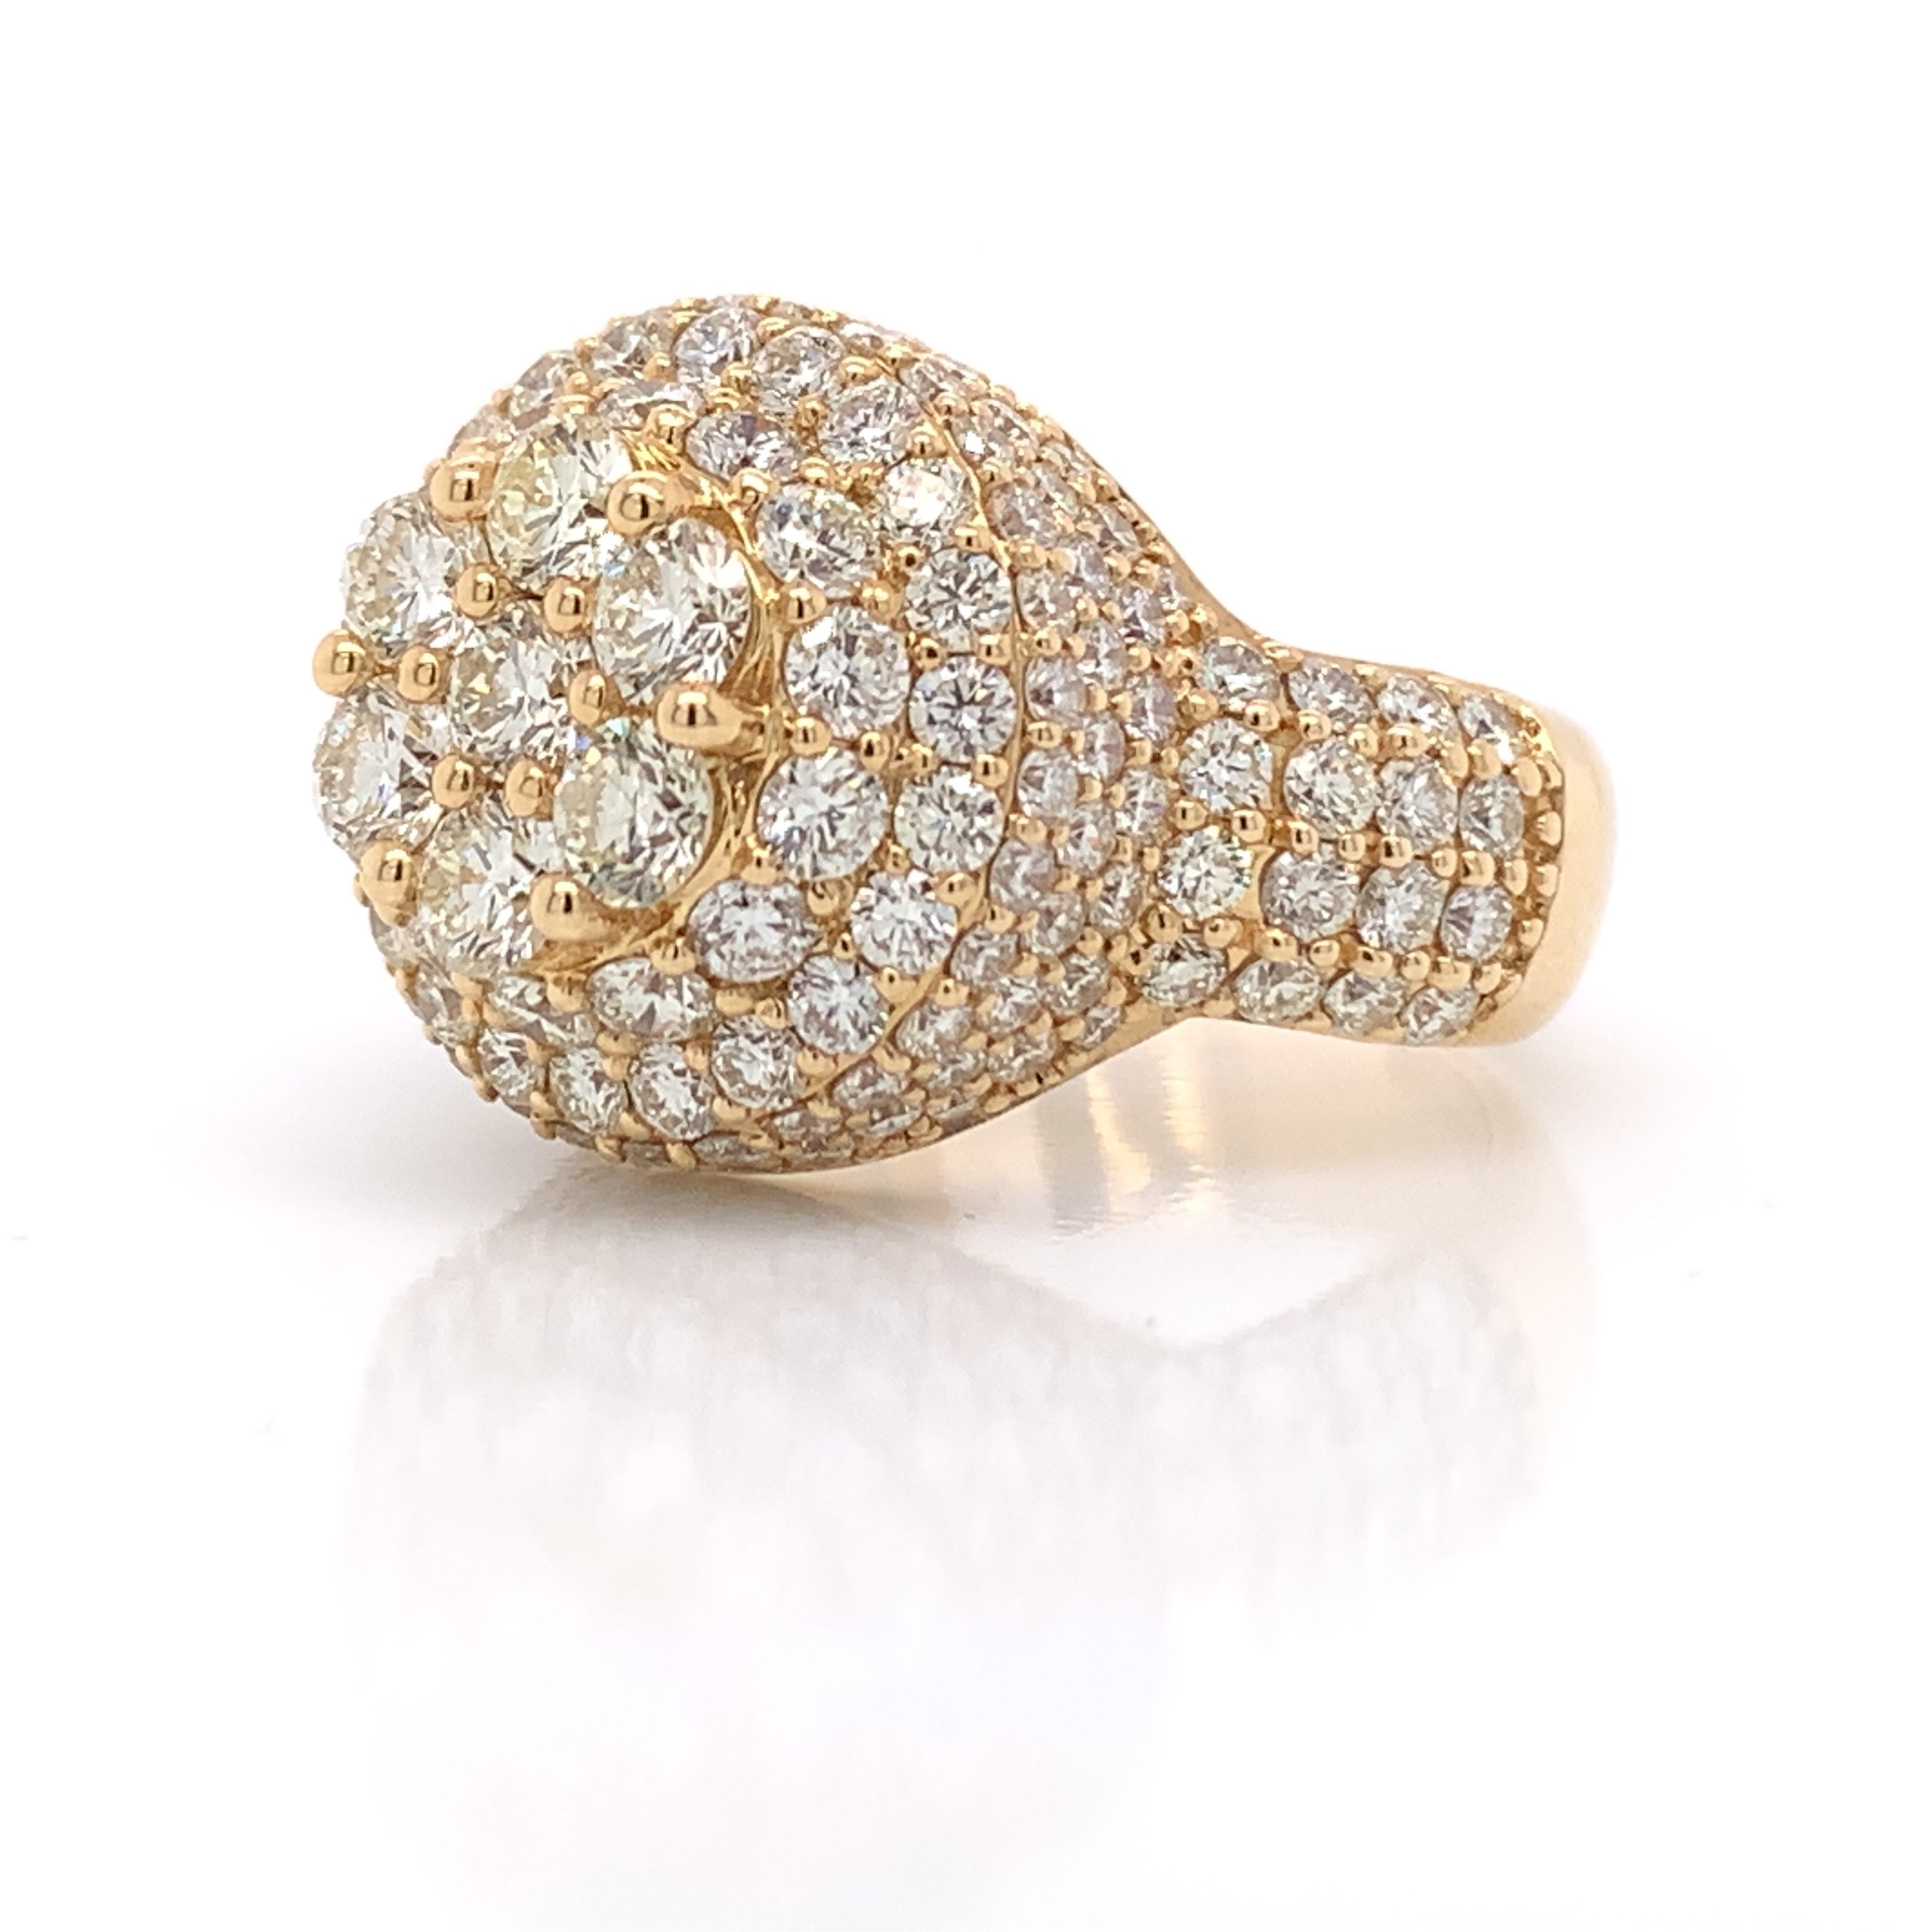 6.00 CT. Diamond 14K Gold Ring - White Carat Diamonds 